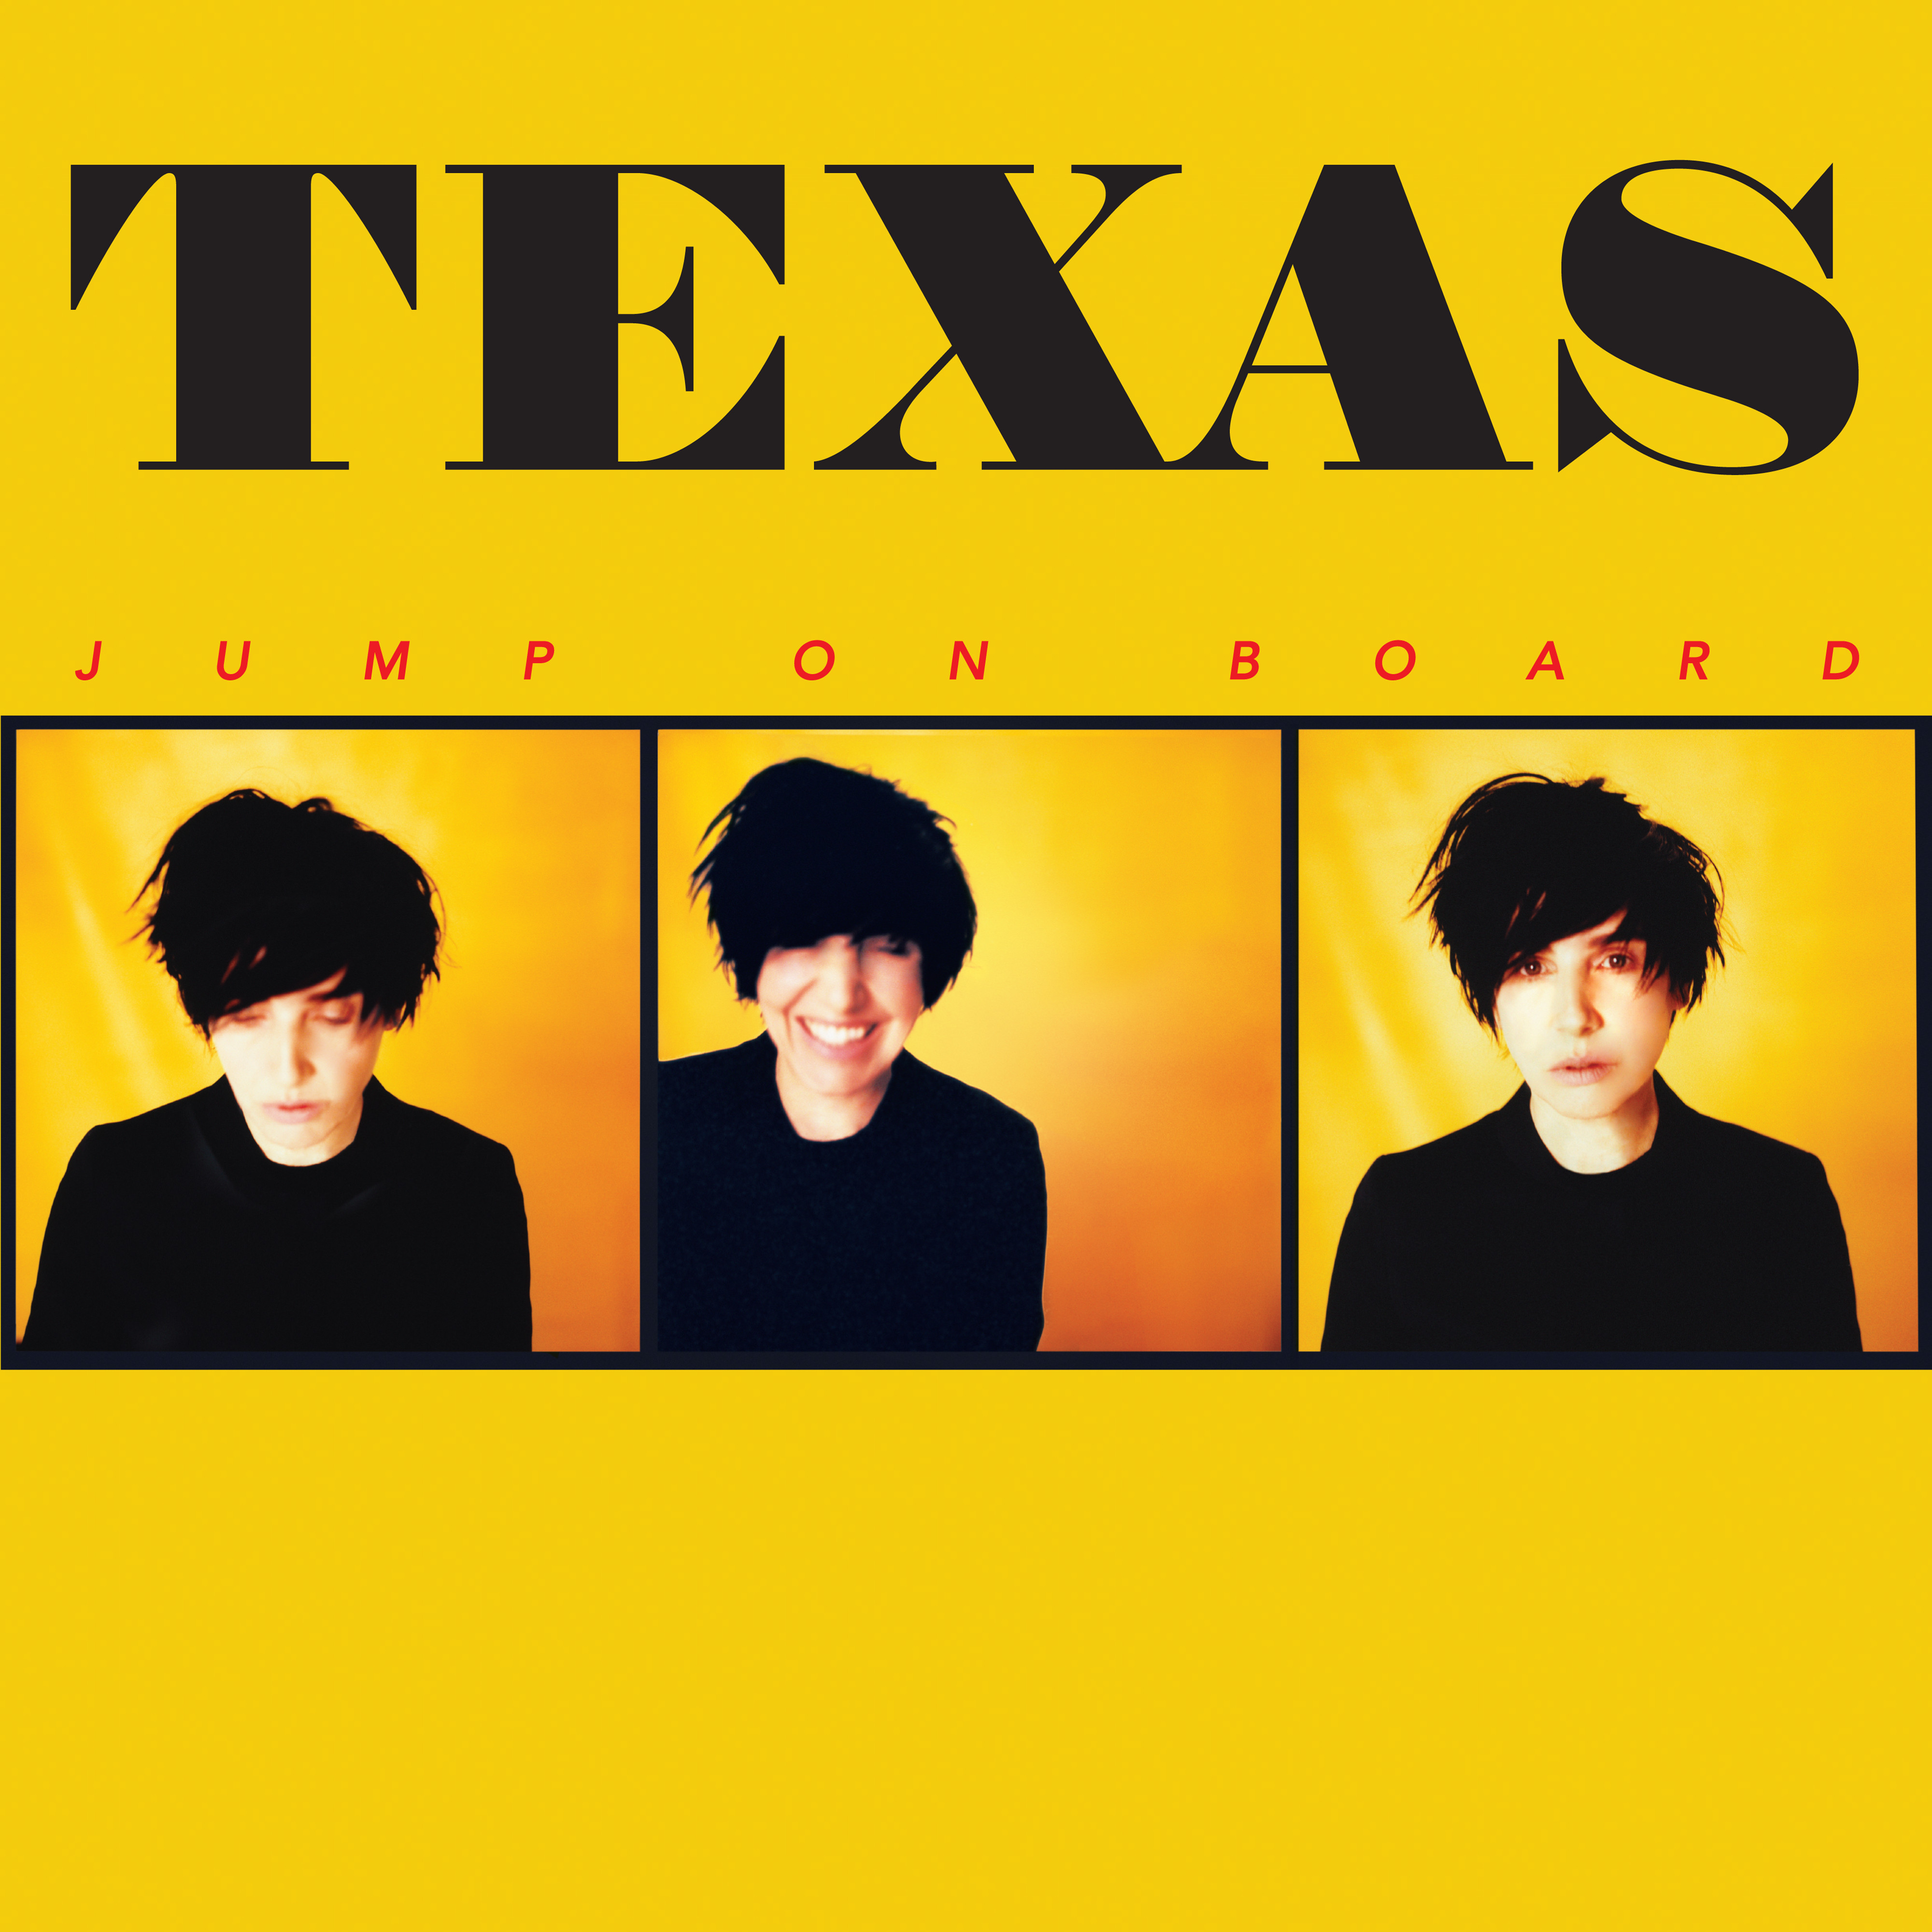 Texas - Jump On Board album art